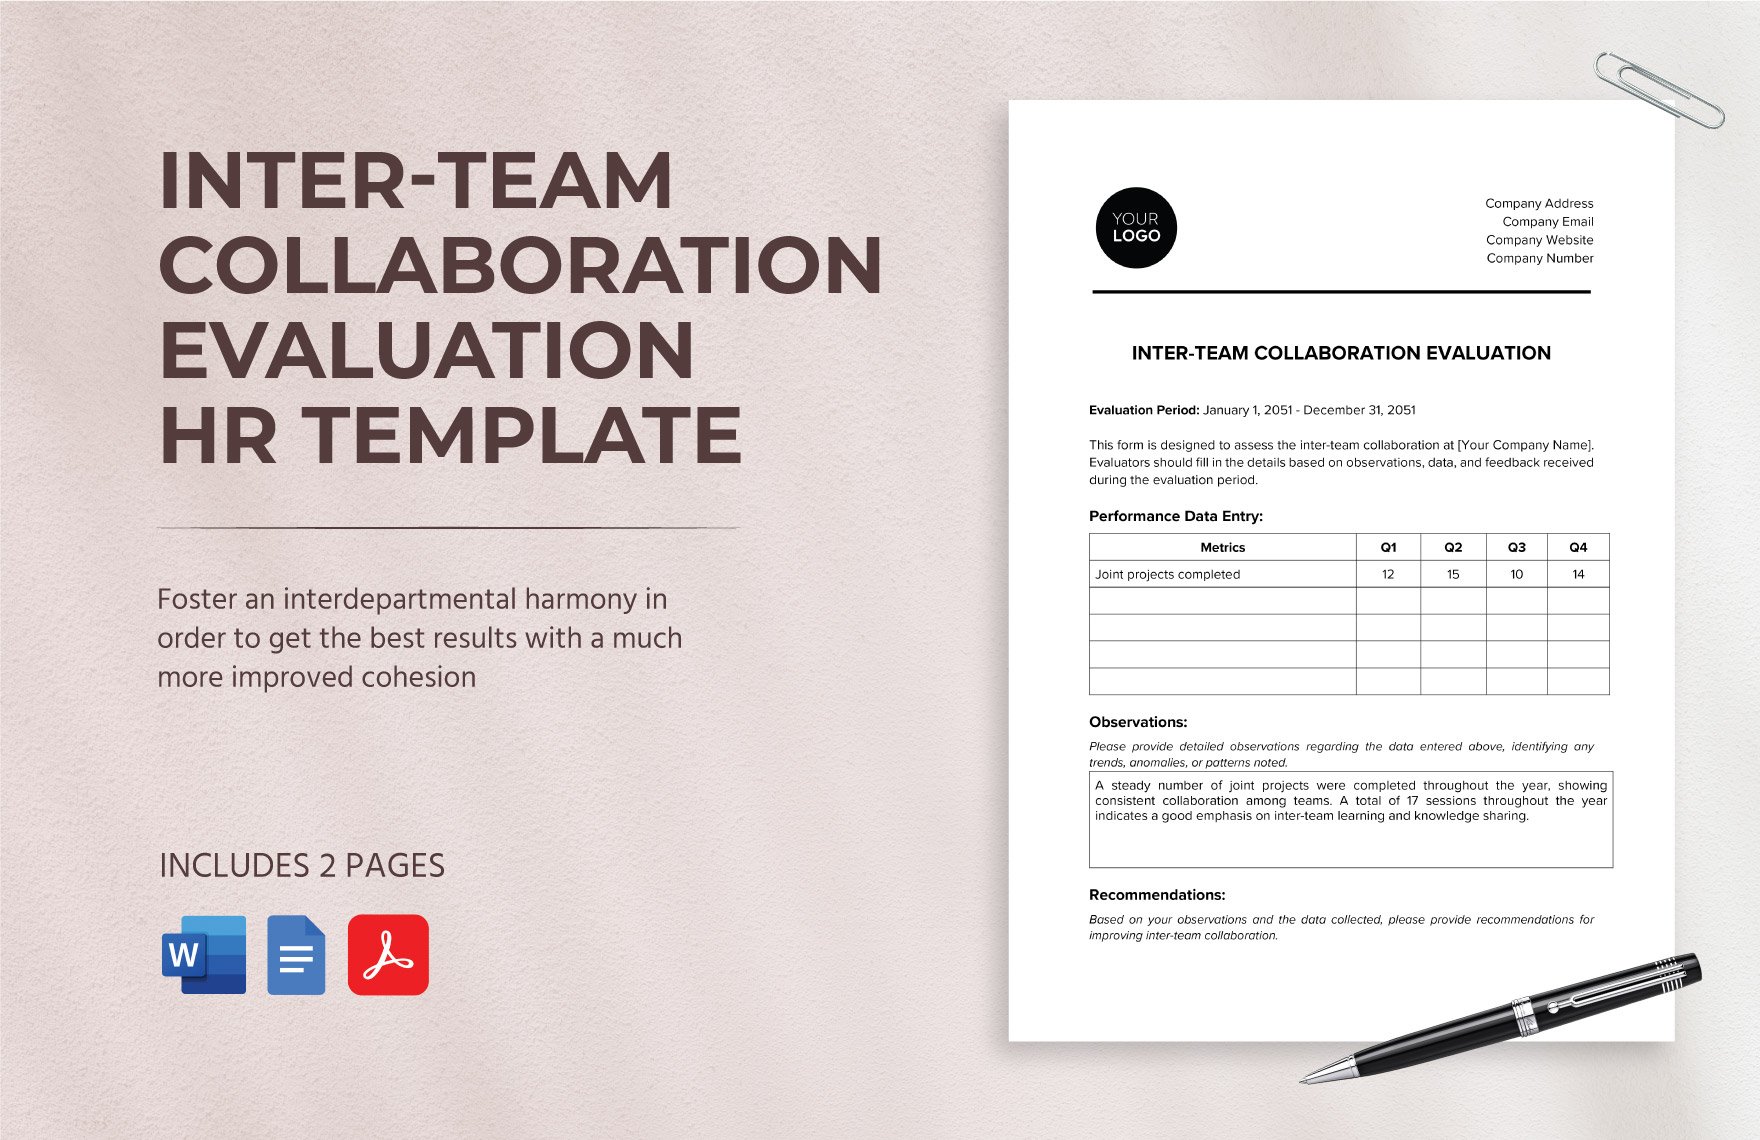 Inter-team Collaboration Evaluation HR Template